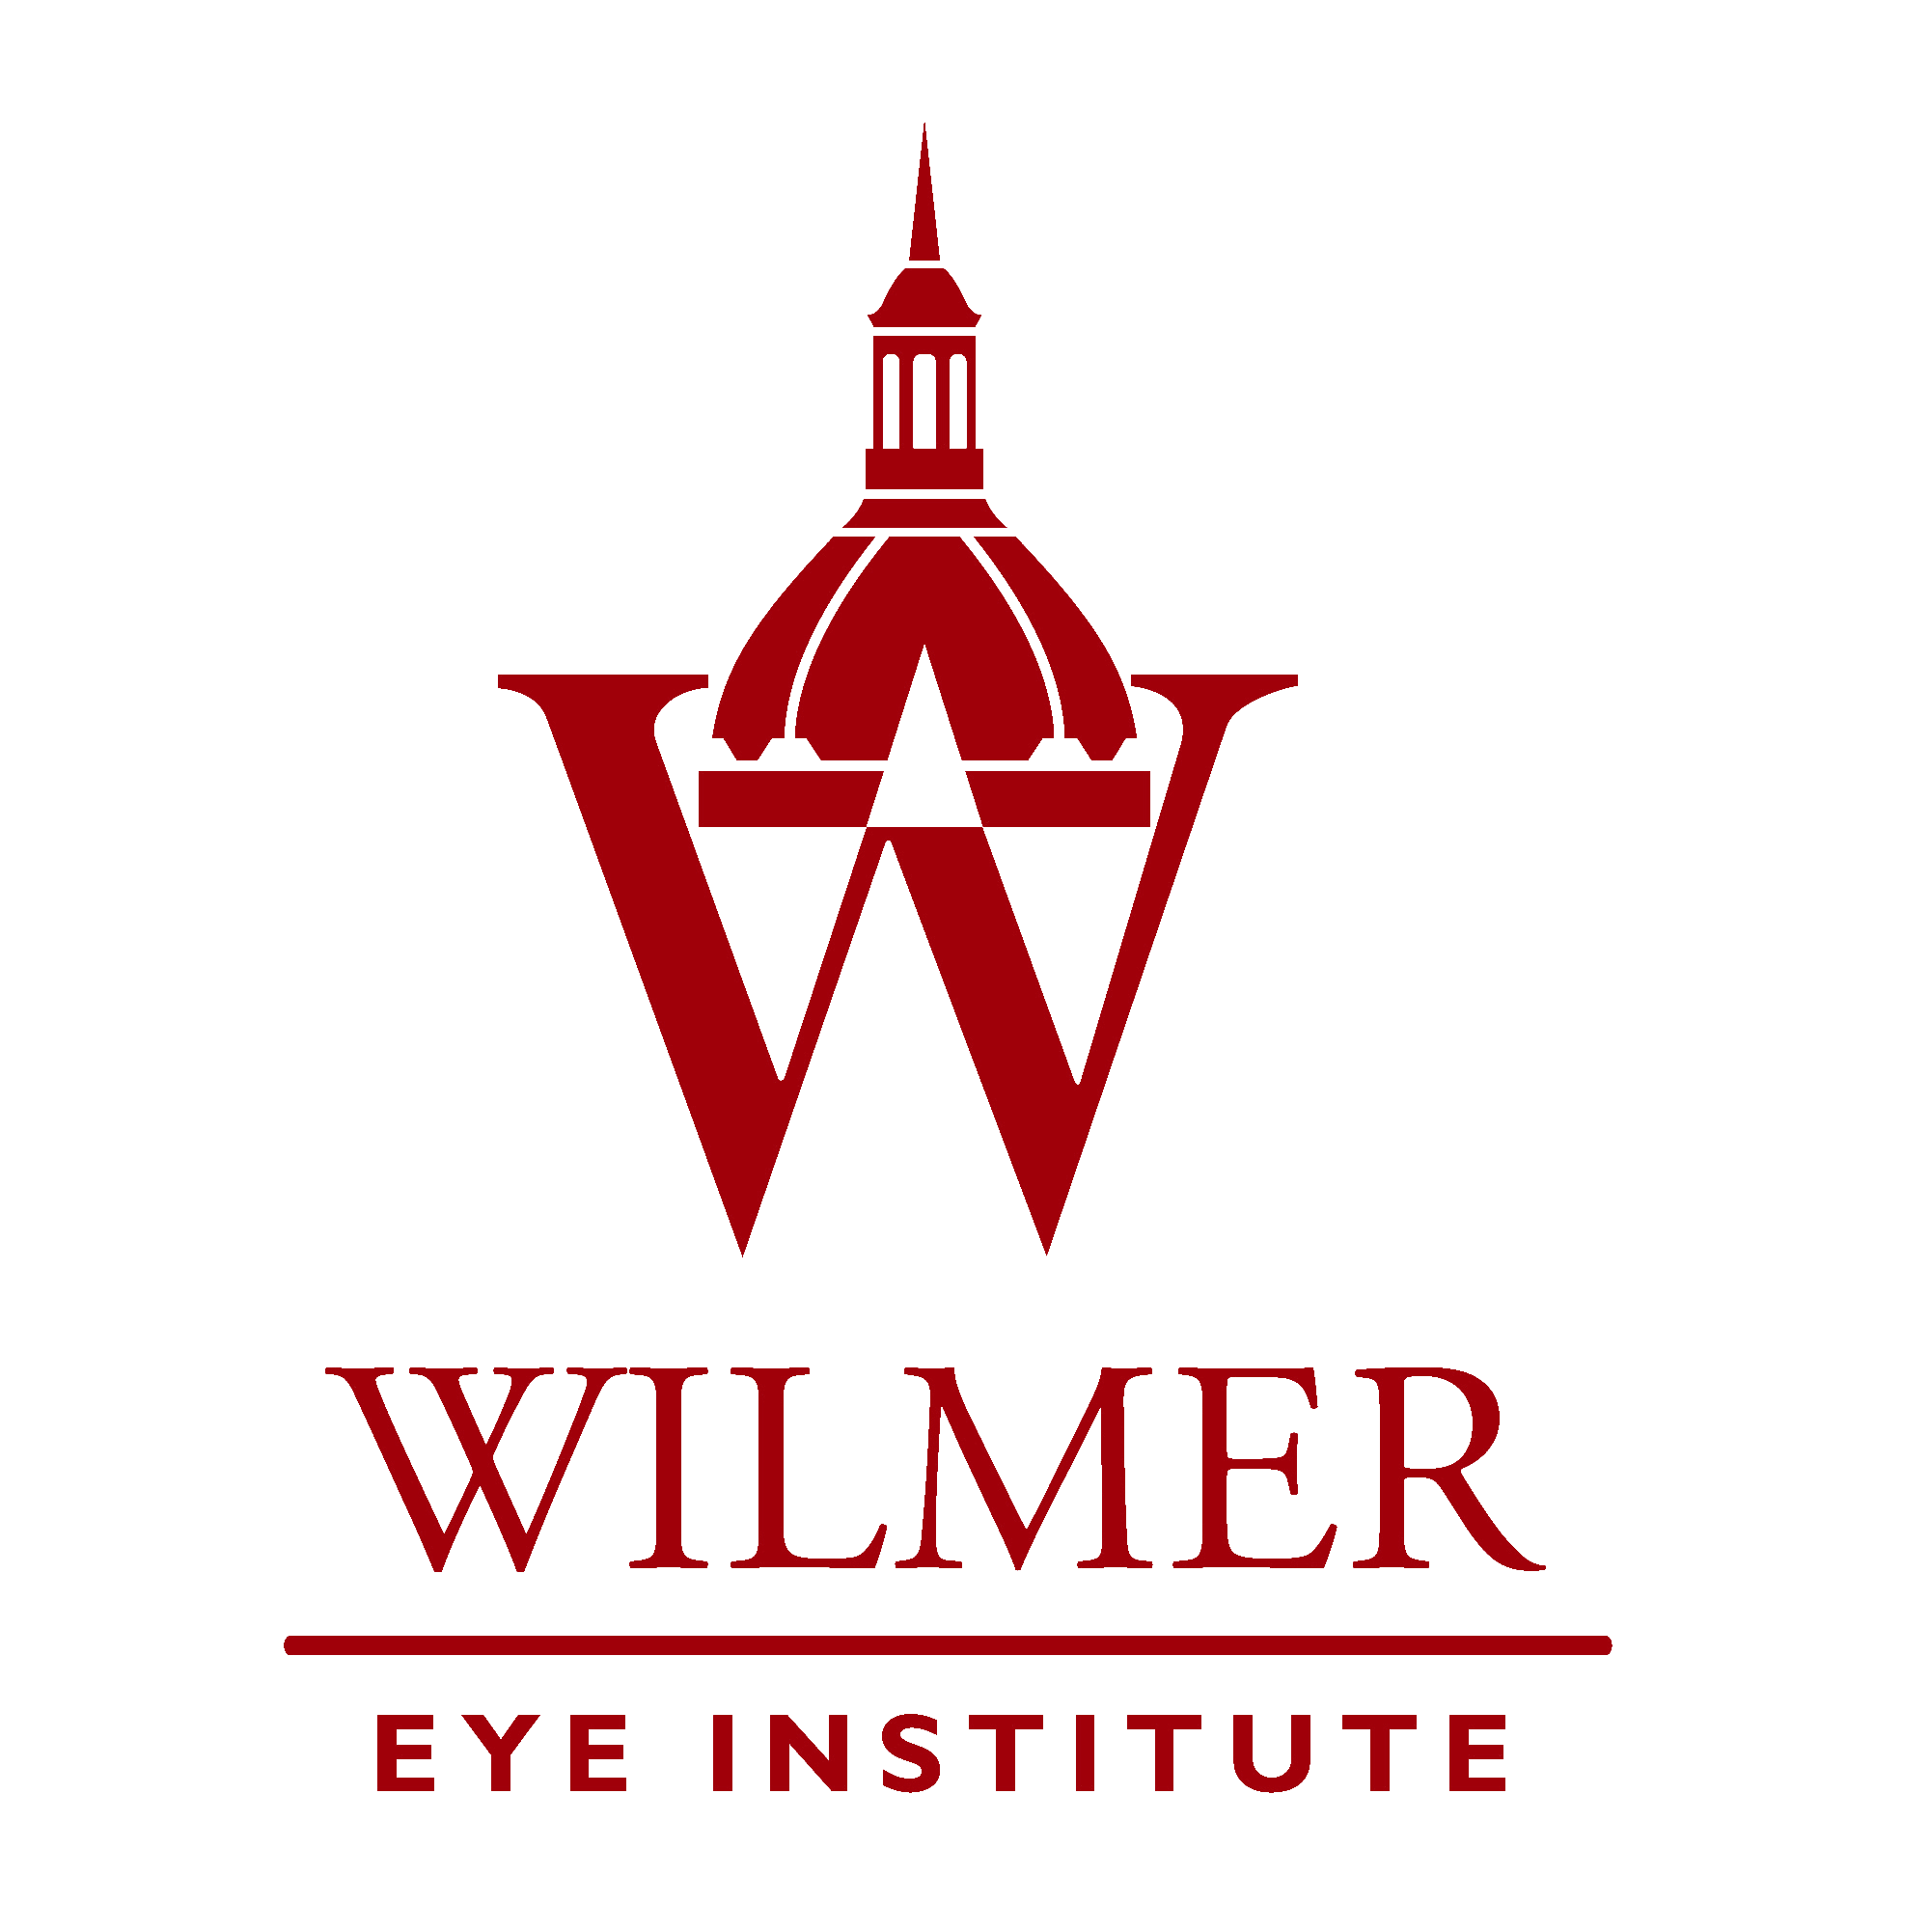 Wilmer Eye Institute logo